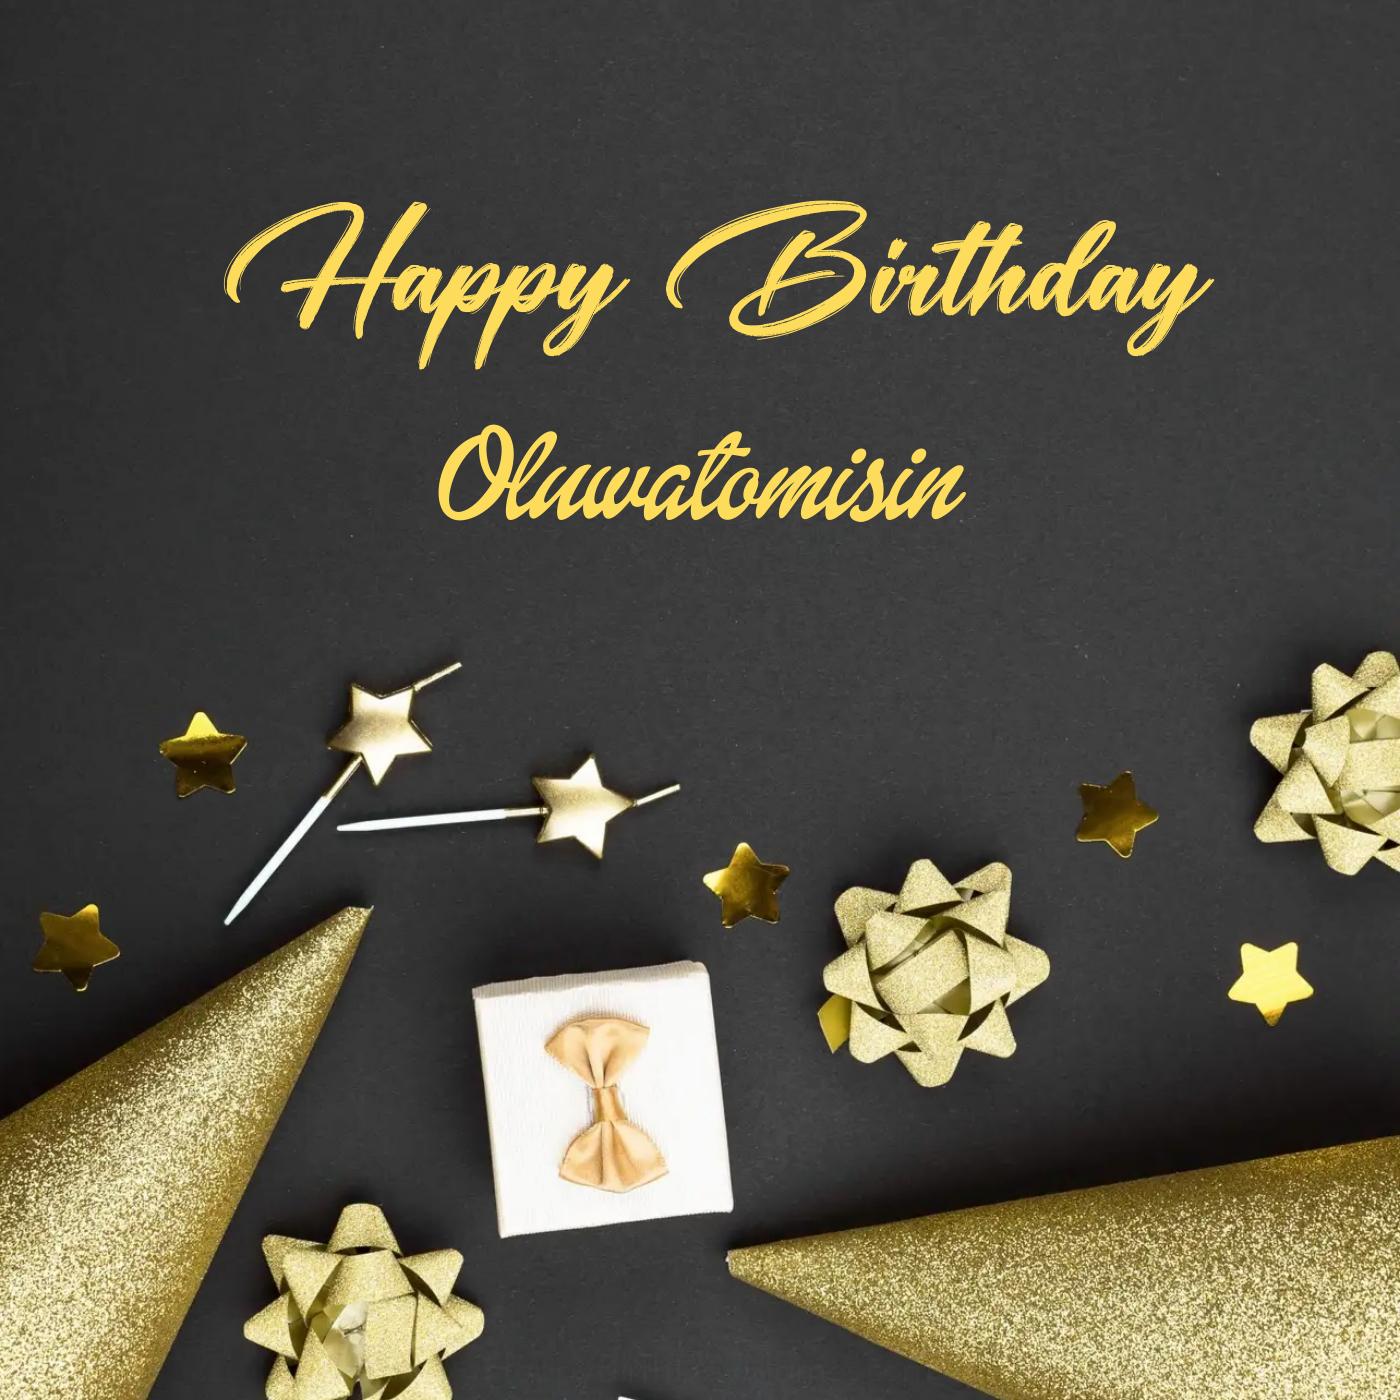 Happy Birthday Oluwatomisin Golden Theme Card